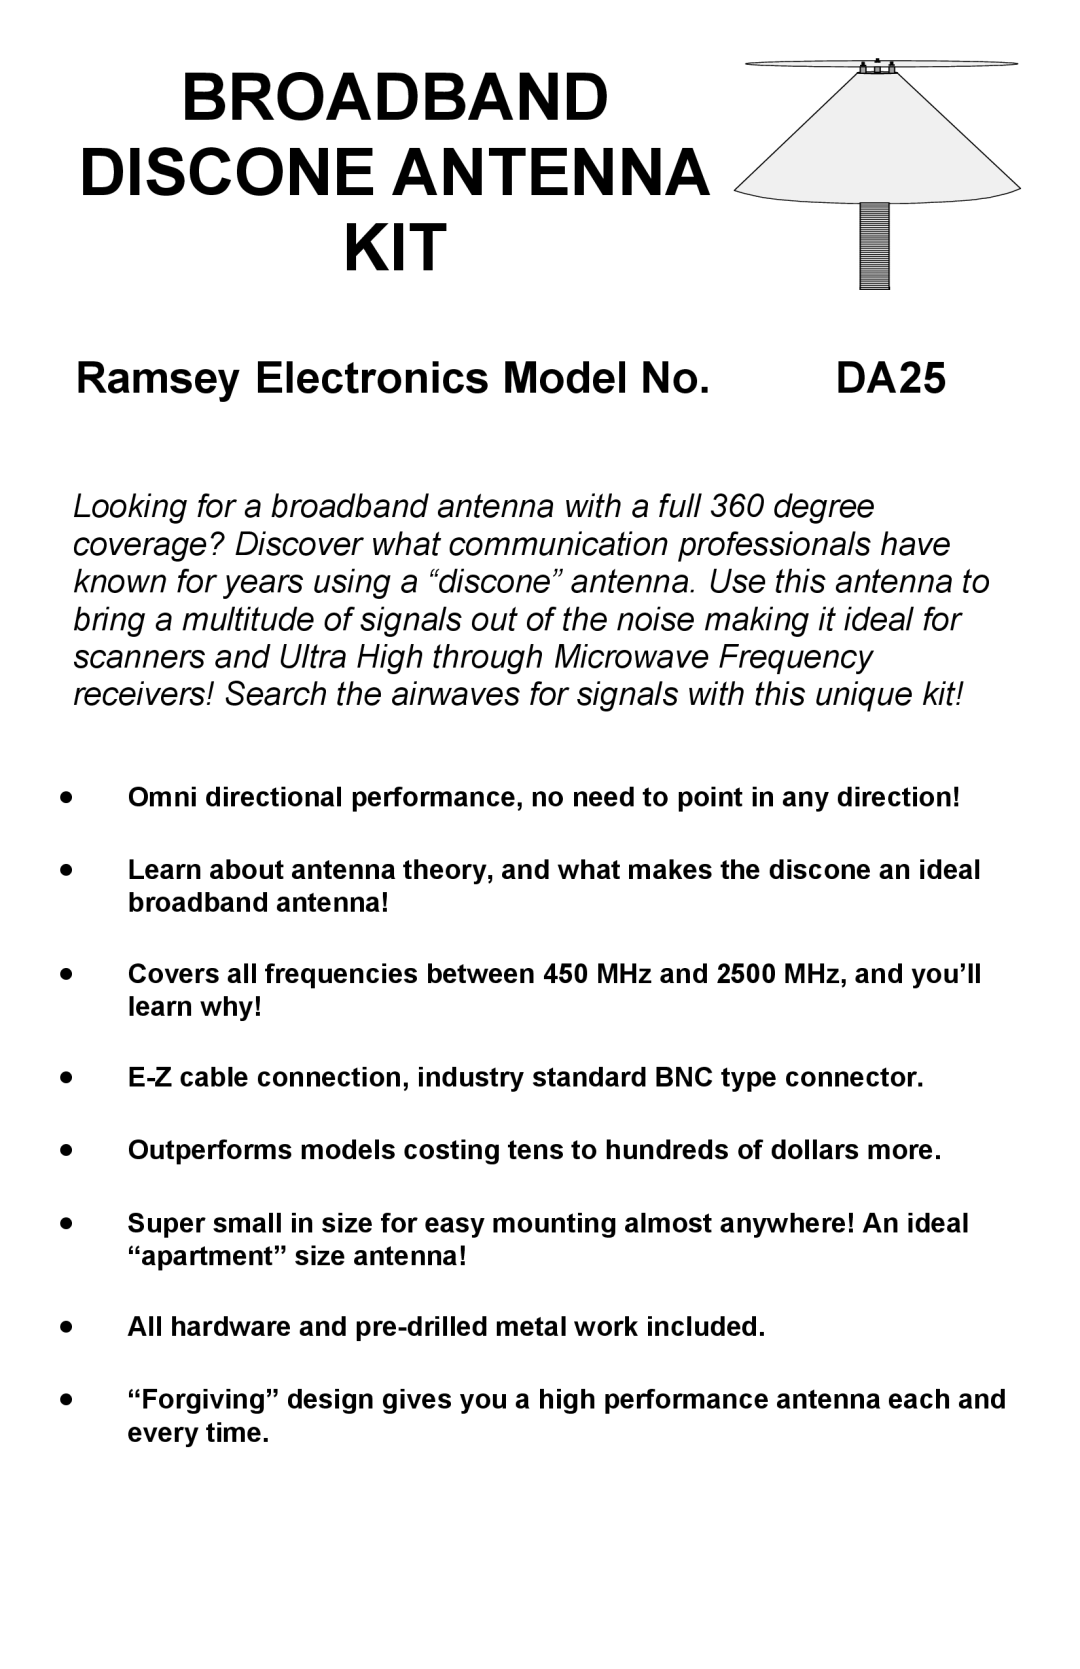 Ramsey Electronics DA25 manual Broadband Discone Antenna Kit, Ramsey Electronics Model No 